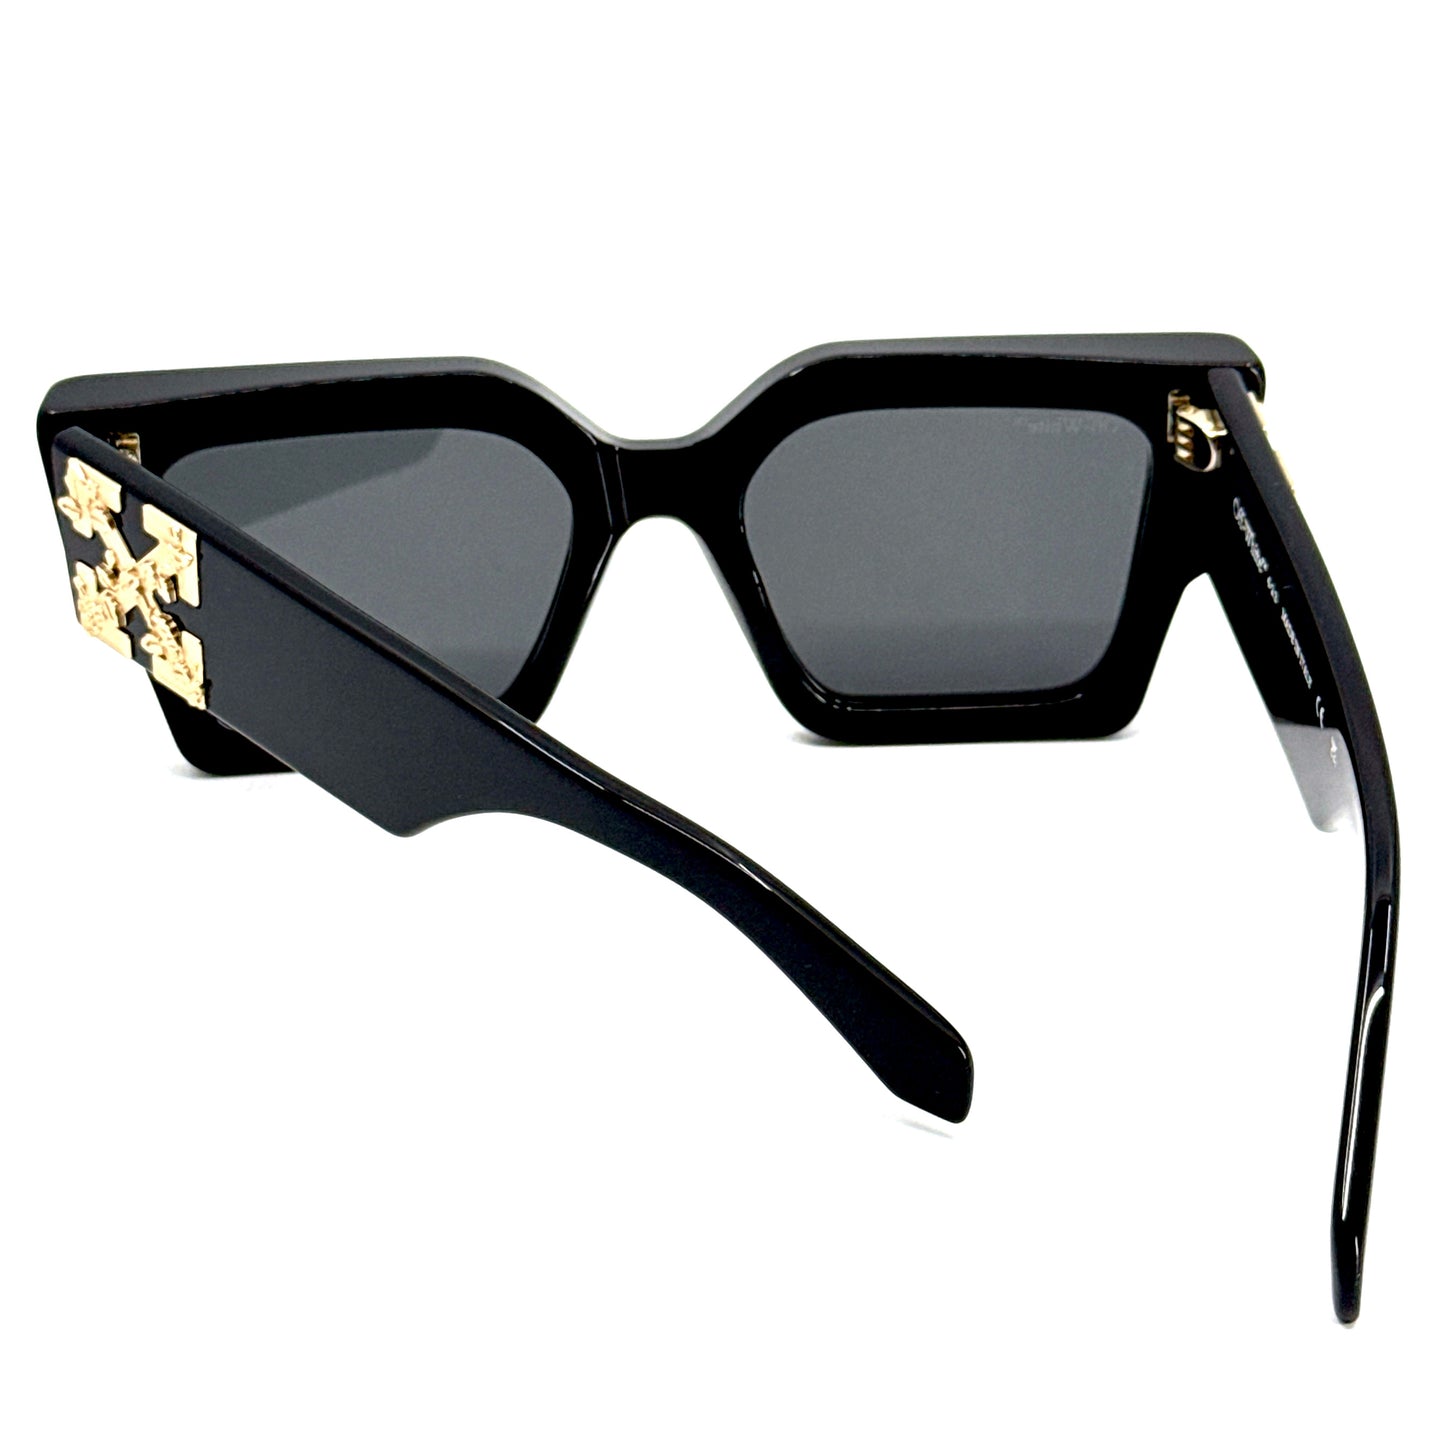 OFF-WHITE Sunglasses CATALINA OERI003 1007